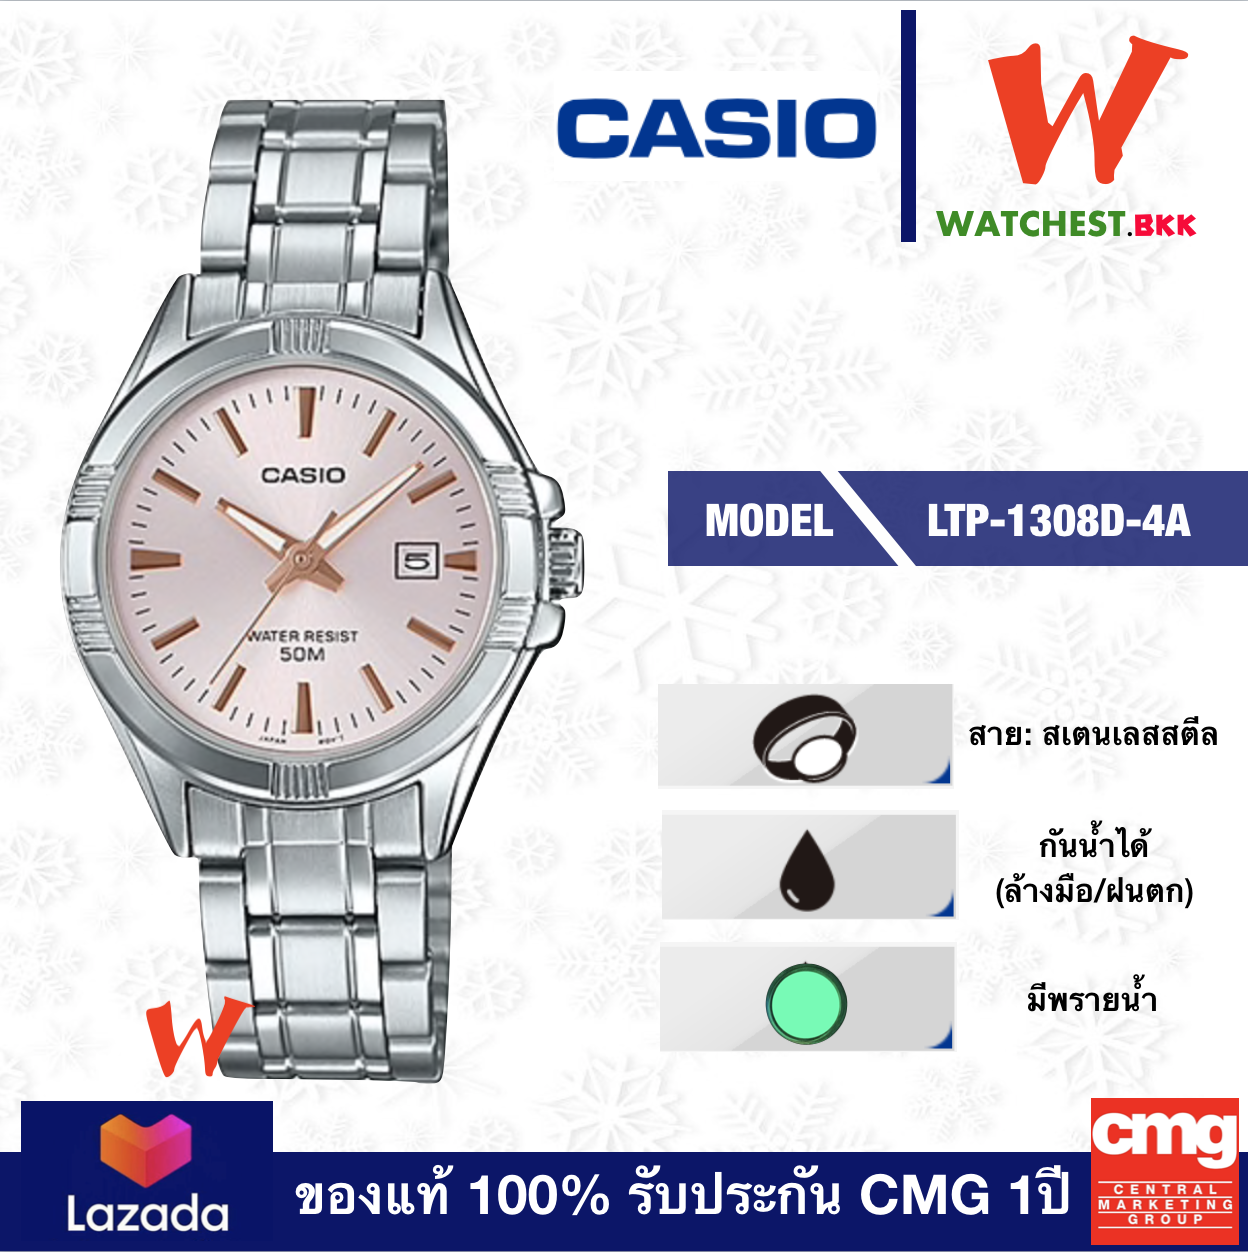 casio นาฬิกาข้อมือผู้หญิง สายสเตนเลส รุ่น LTP-1308D-4A, คาสิโอ้ สายเหล็ก หน้าปัดชมพู ตัวล็อกบานพับ (watchestbkk คาสิโอ แท้ ของแท้100% ประกัน CMG)